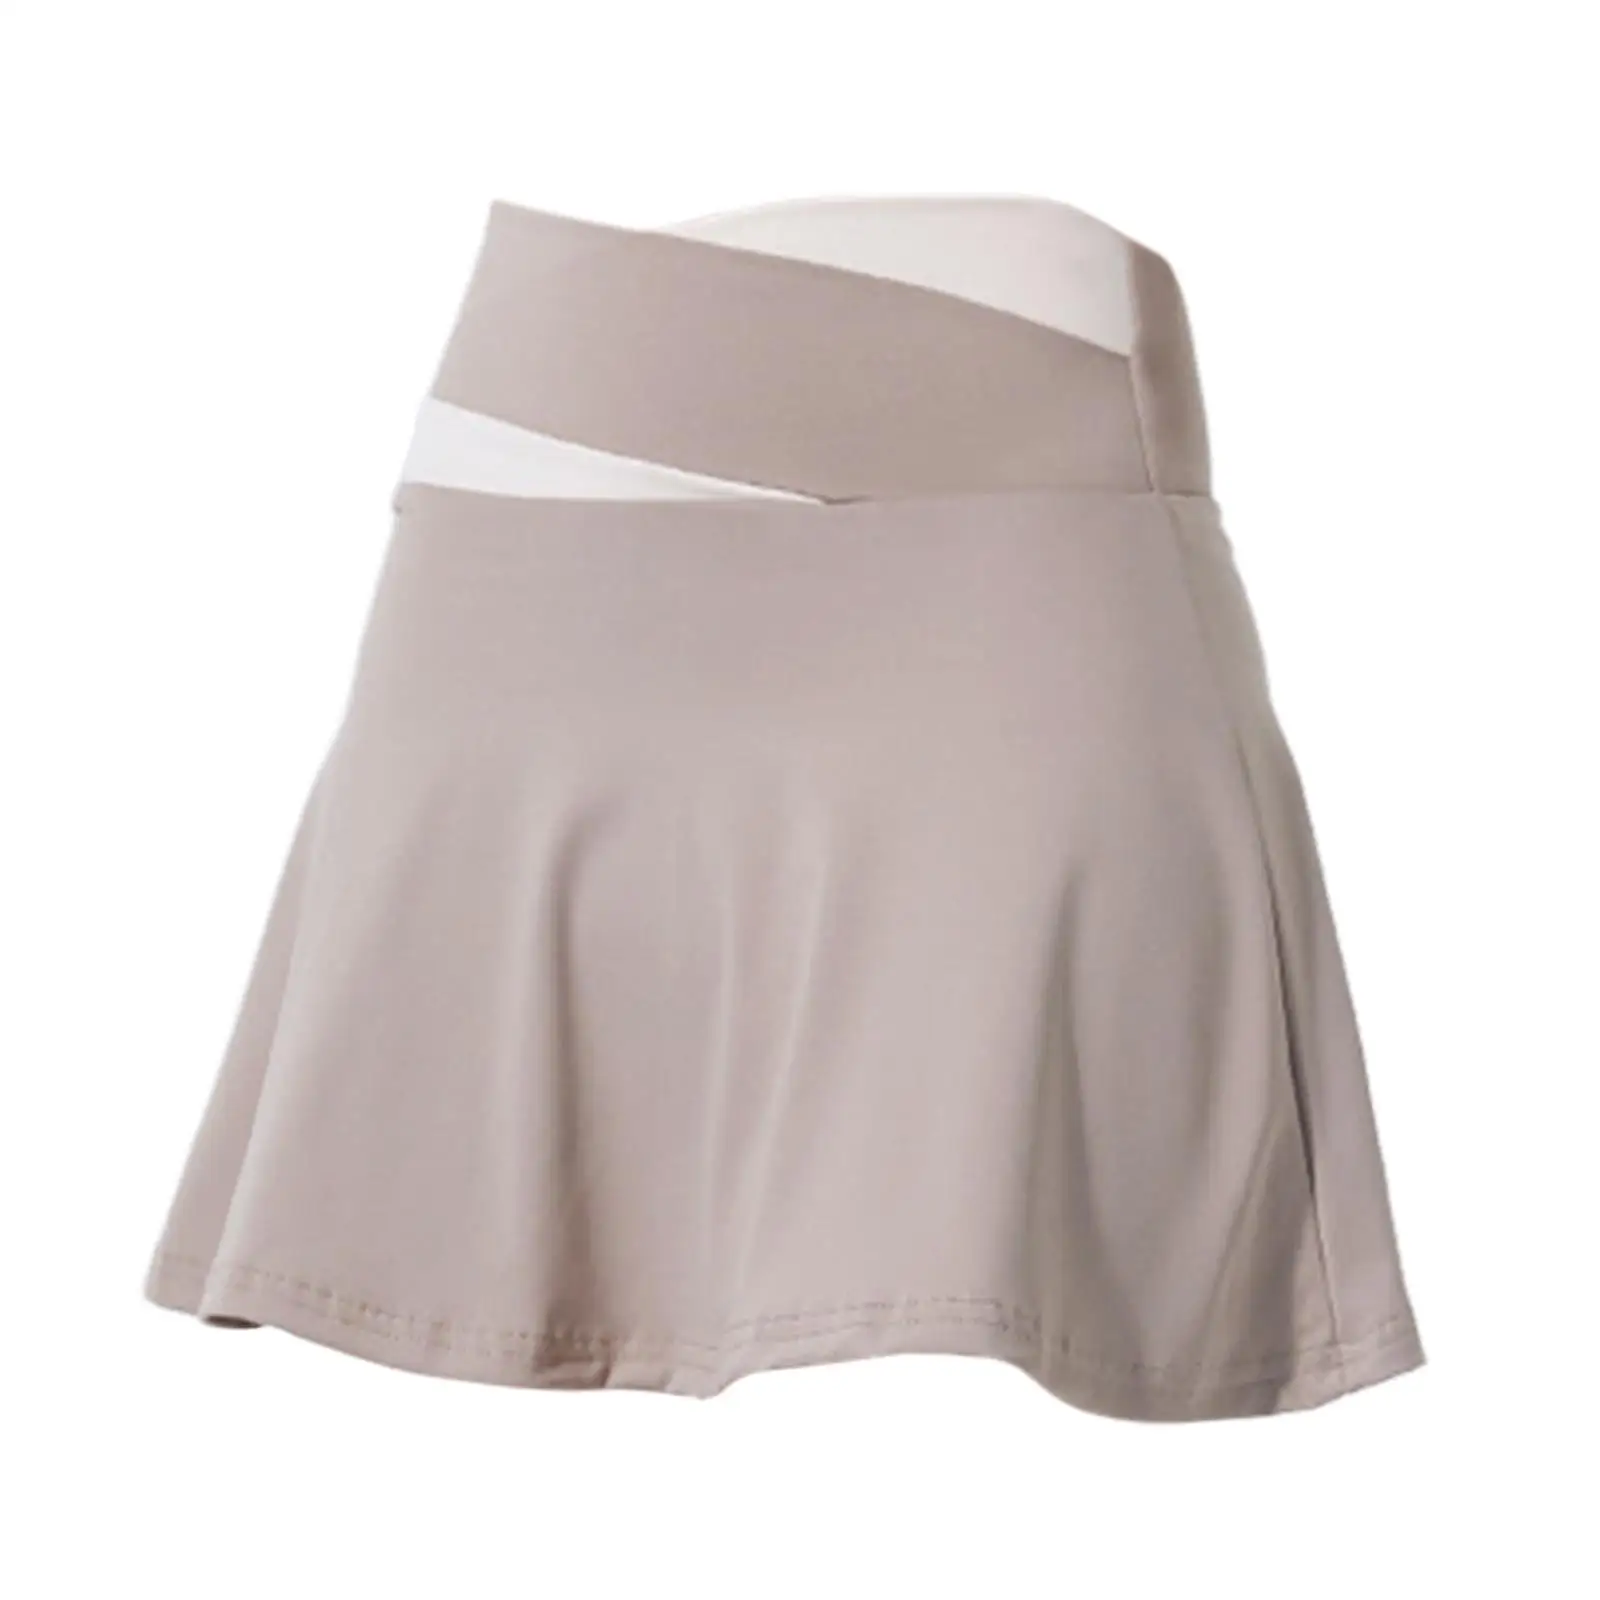 Tennis Skirts Short Skirts Mini Skirt Clothing Outfits Casual Athletic Womens Skirt for Golf Running Summer Beach Yoga Exercise